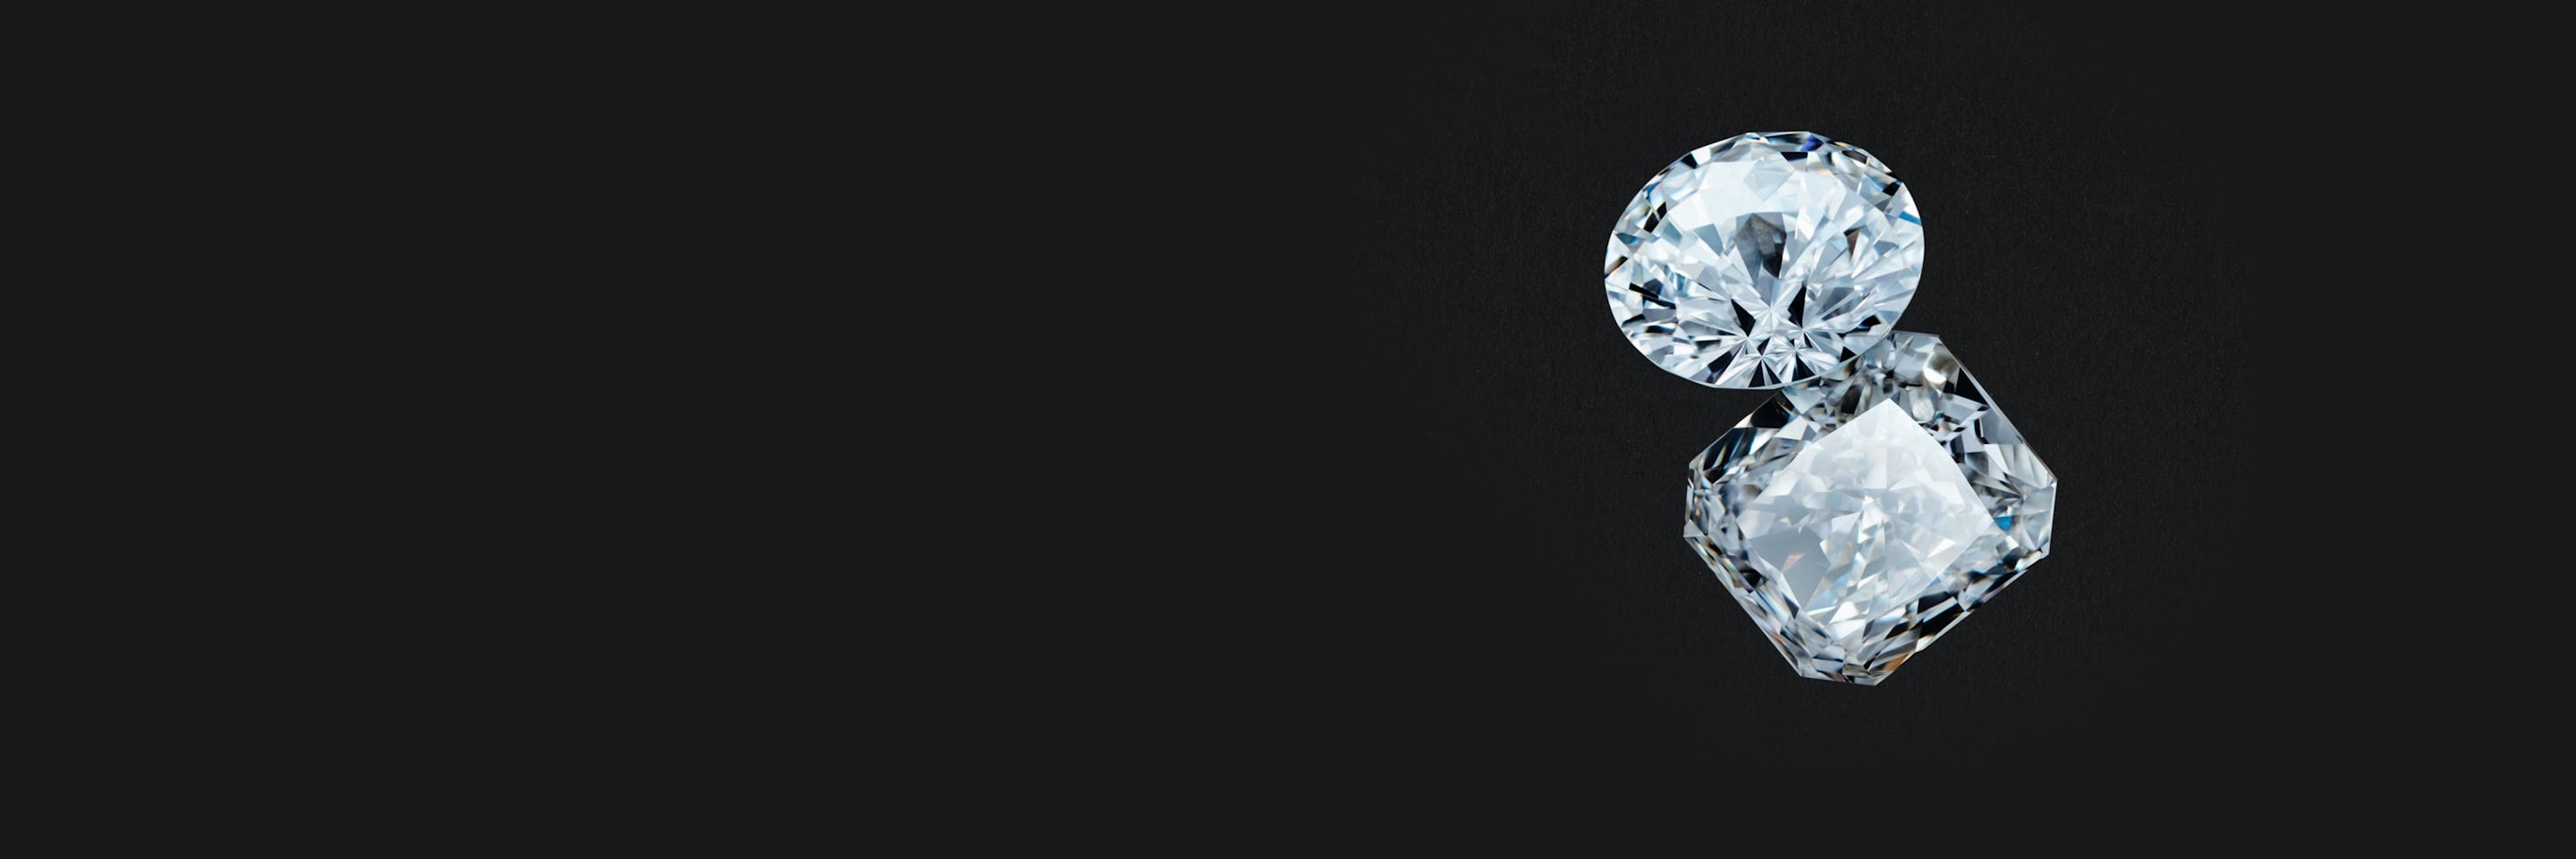 Lab-grown diamonds vs mined diamonds 